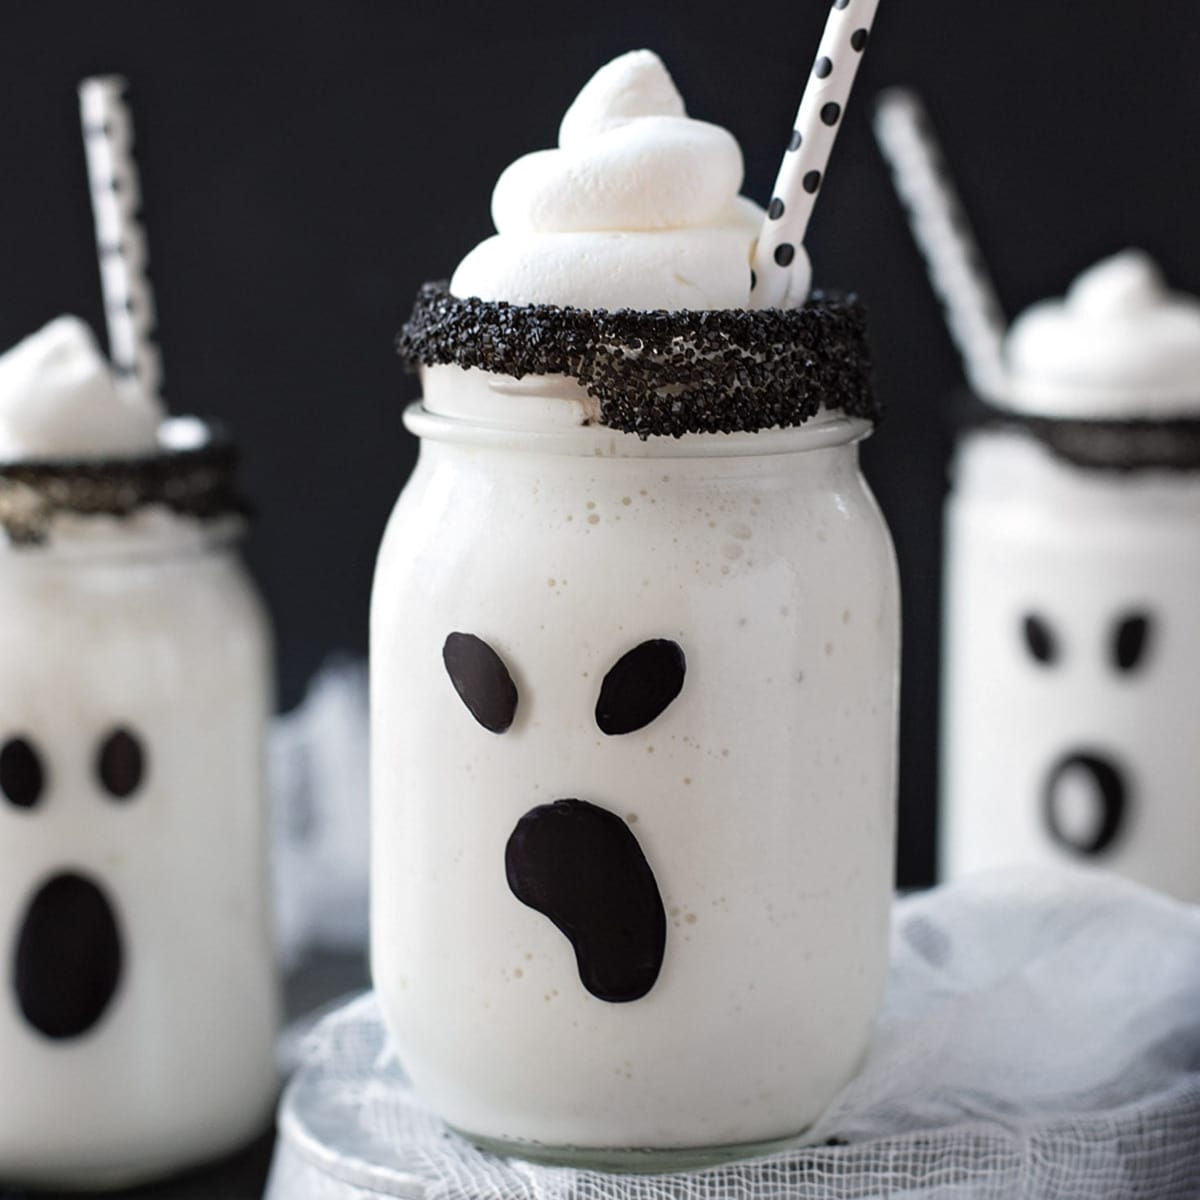 Halloween dinner ideas - boo-nilla ghost milkshakes served in a mason jar.